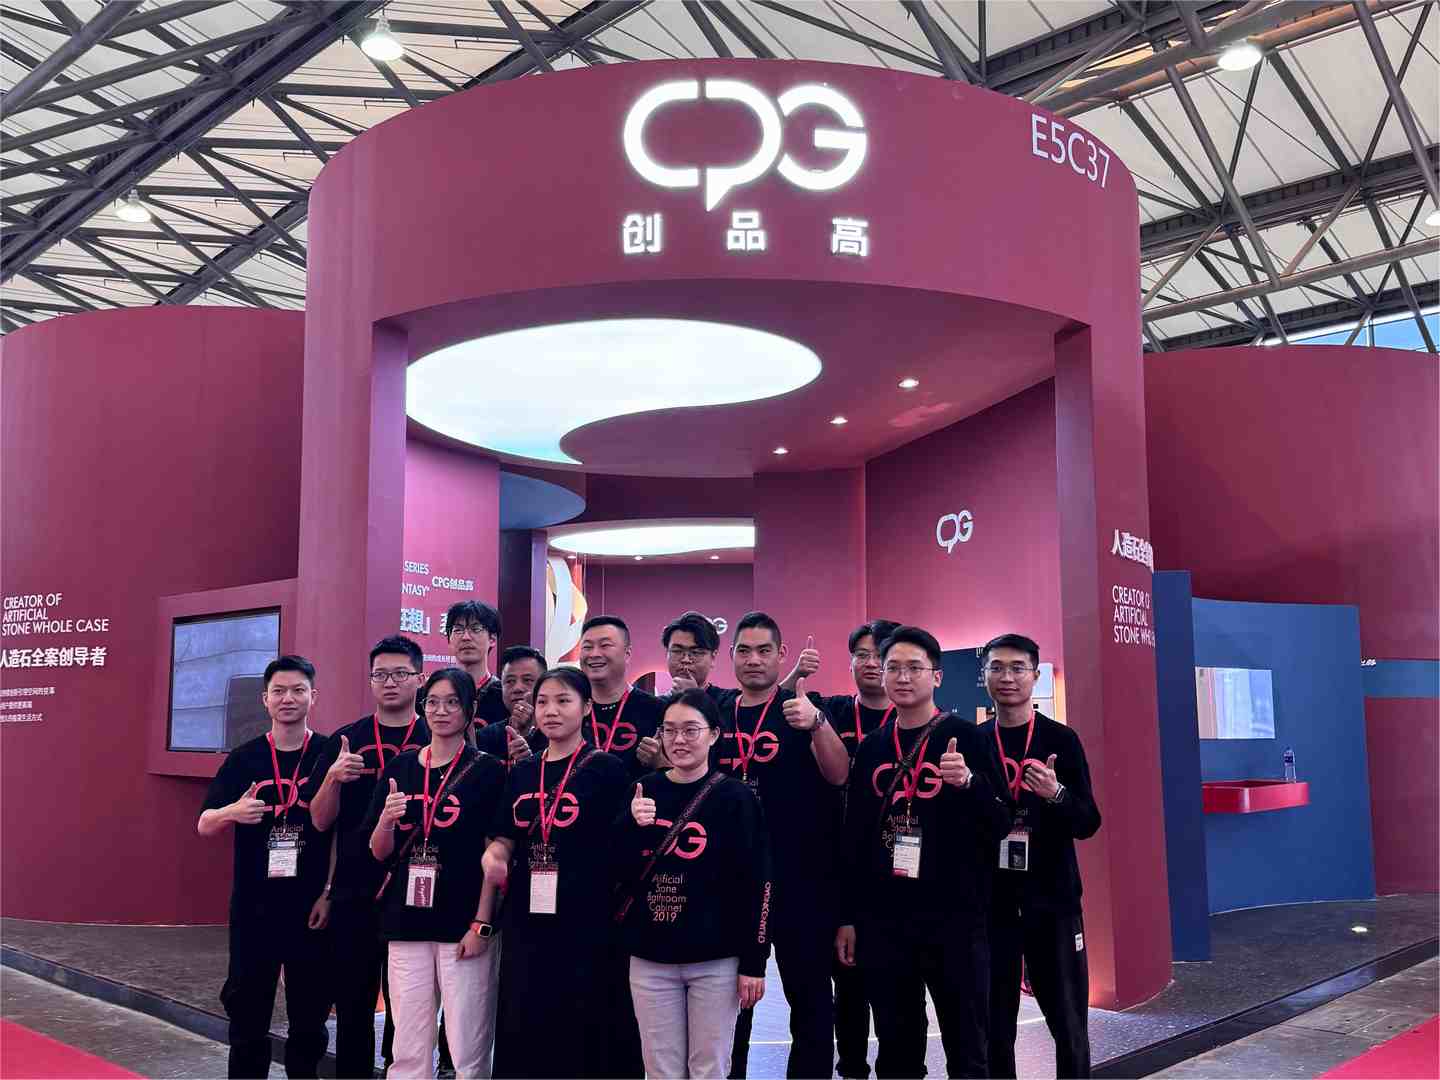 Explore Cpingao's Innovative Bathroom Solutions at KBC 2024, Shanghai